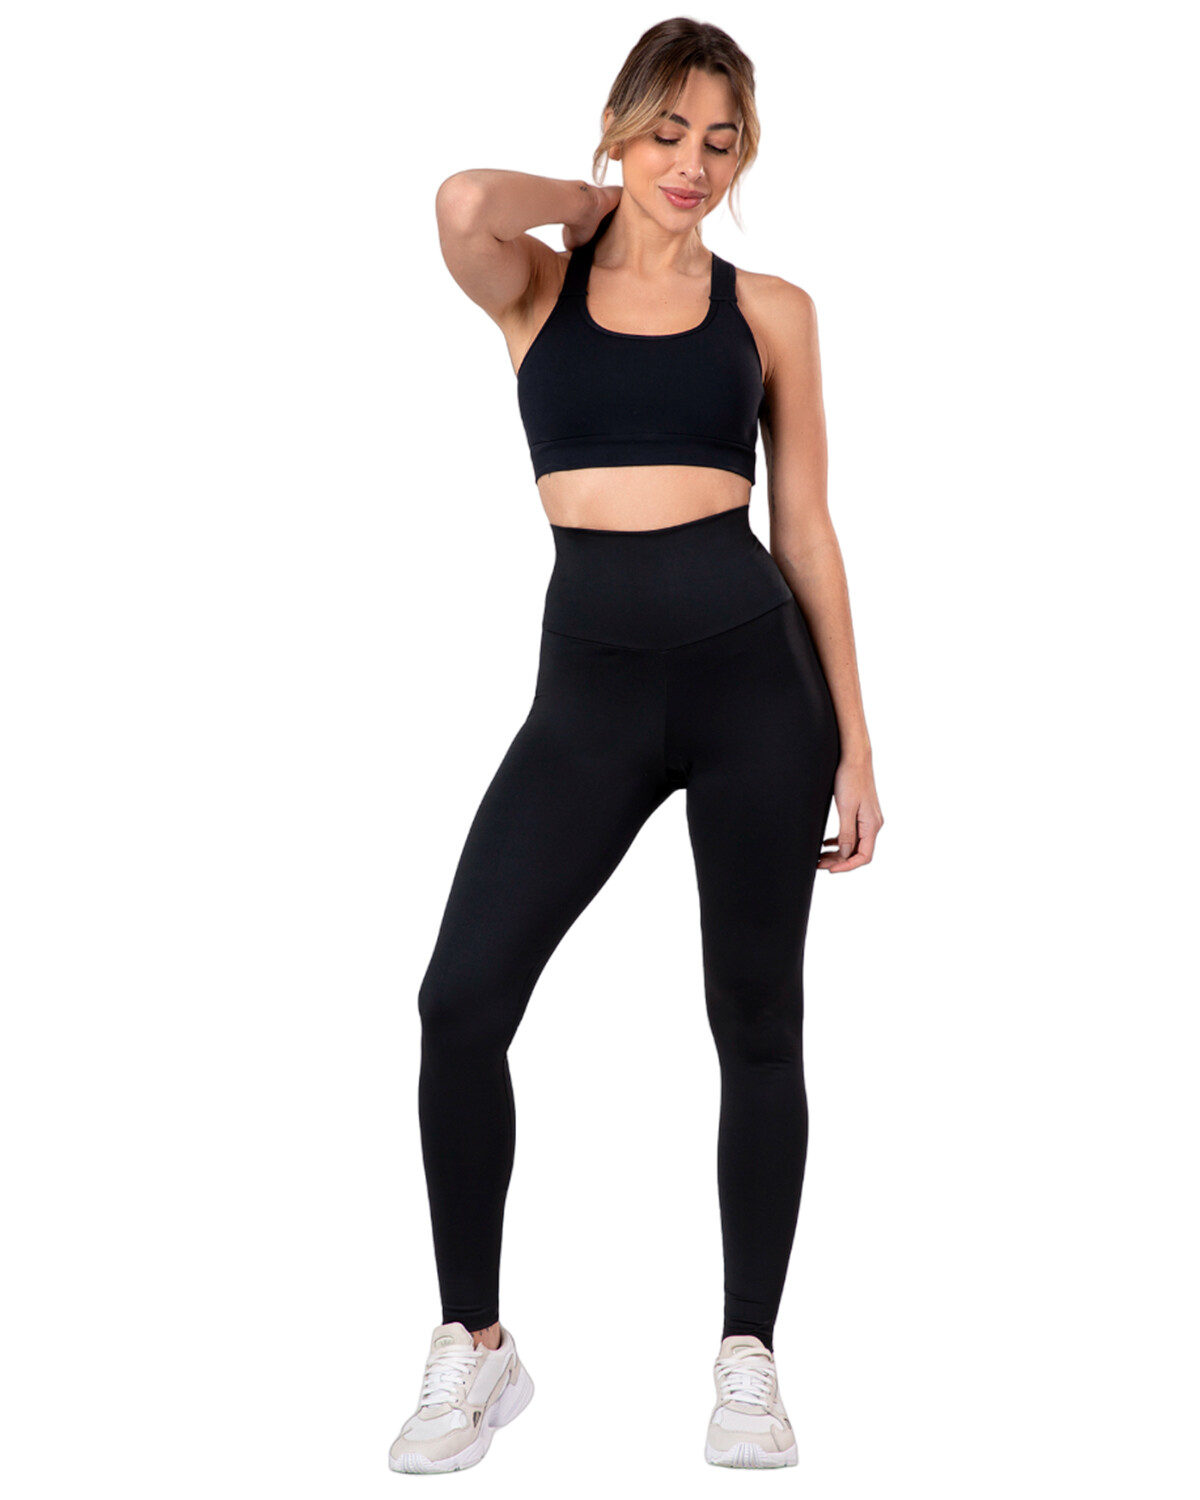 Calza legging deportiva para dama Graphene Negra - Talle P — Electroventas